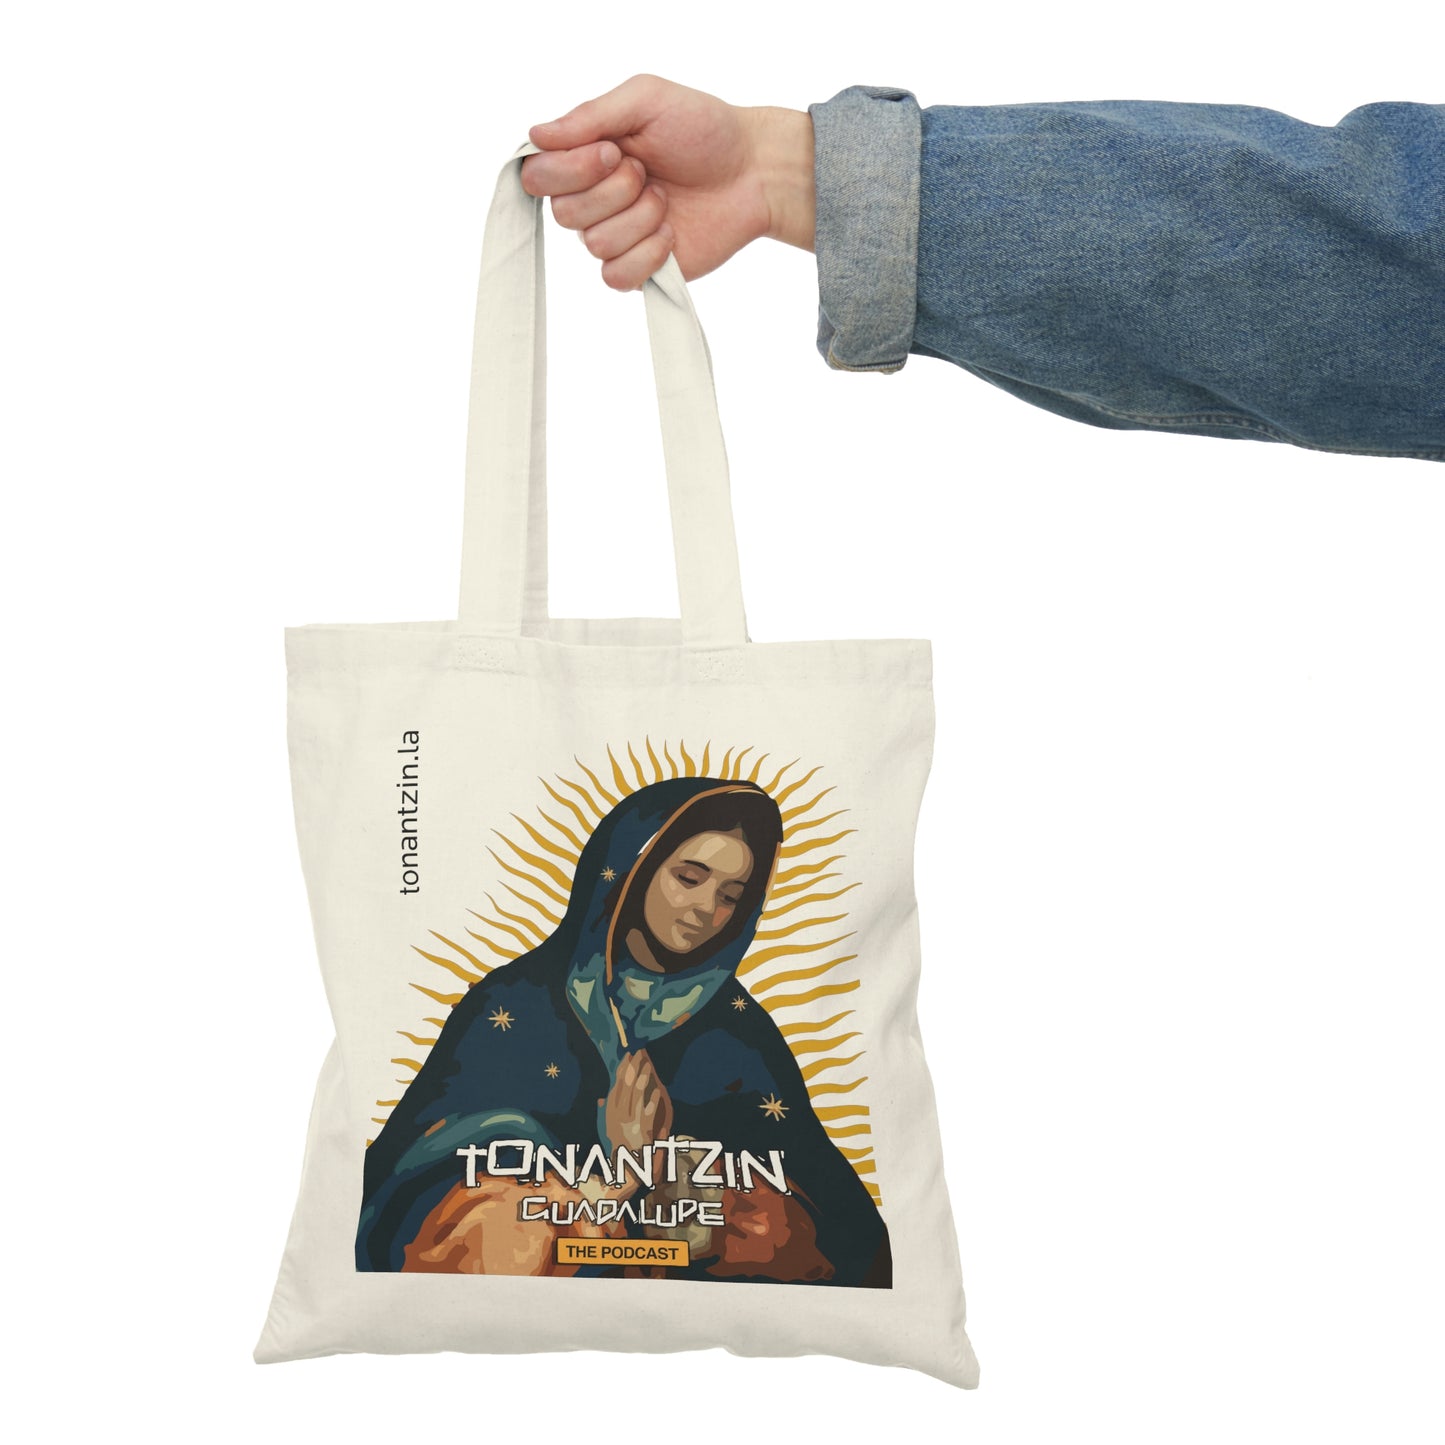 "Tonantzin Guadalupe the podcast" bag